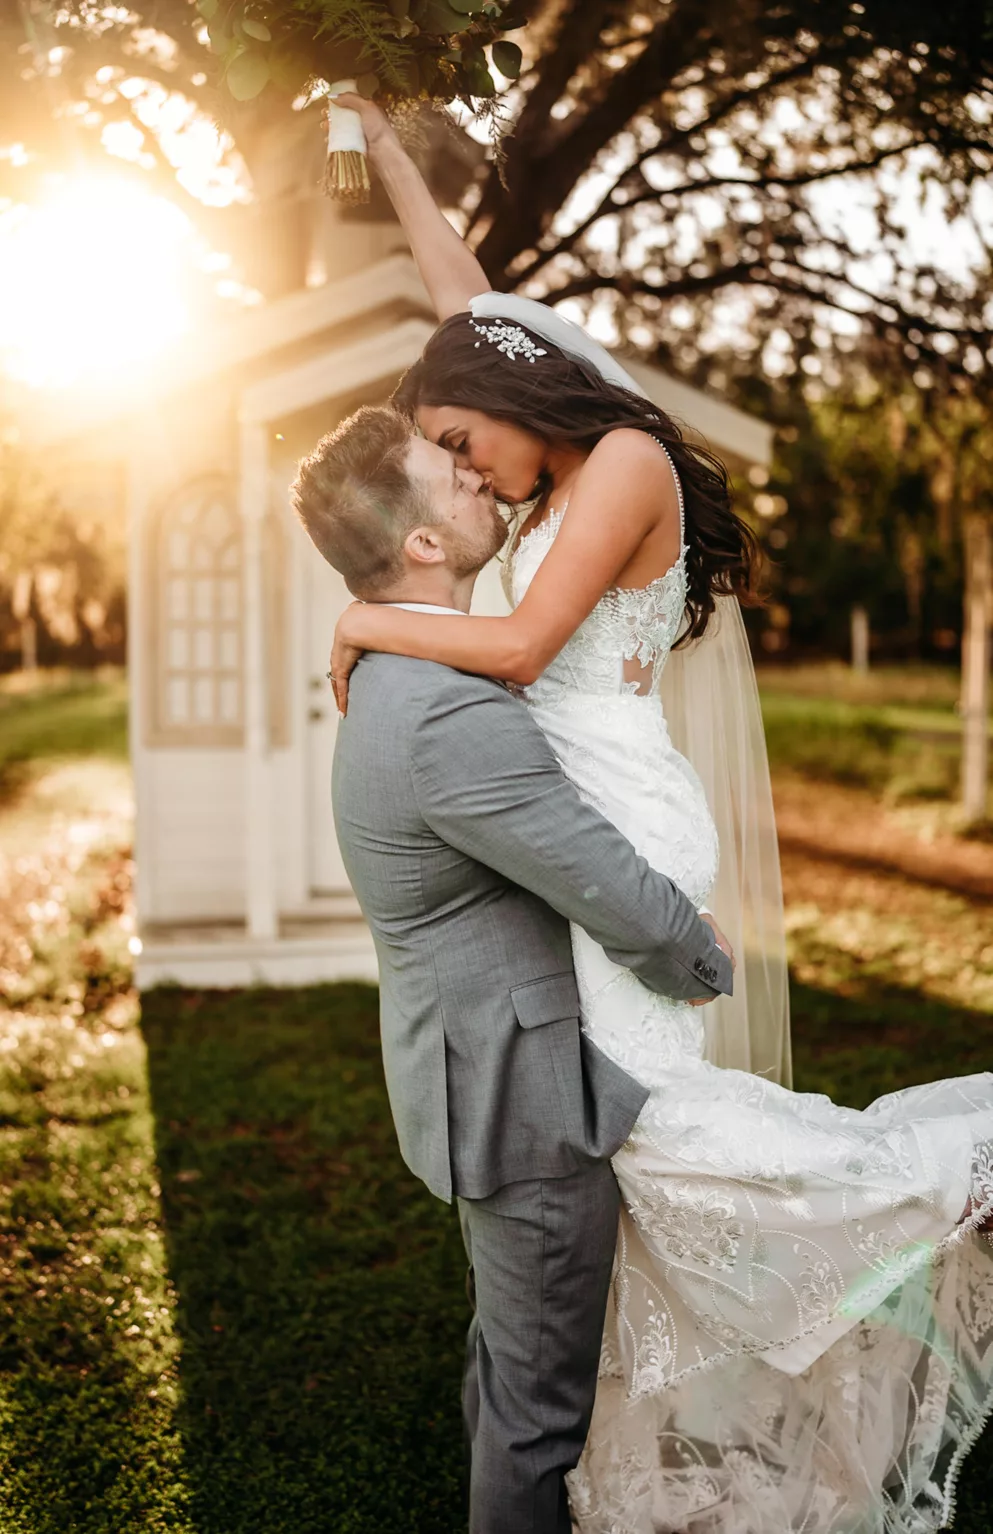 Bride and Groom Chapel Sunset Wedding Portrait | Tampa Bay Photographer Sabrina Autumn Photography